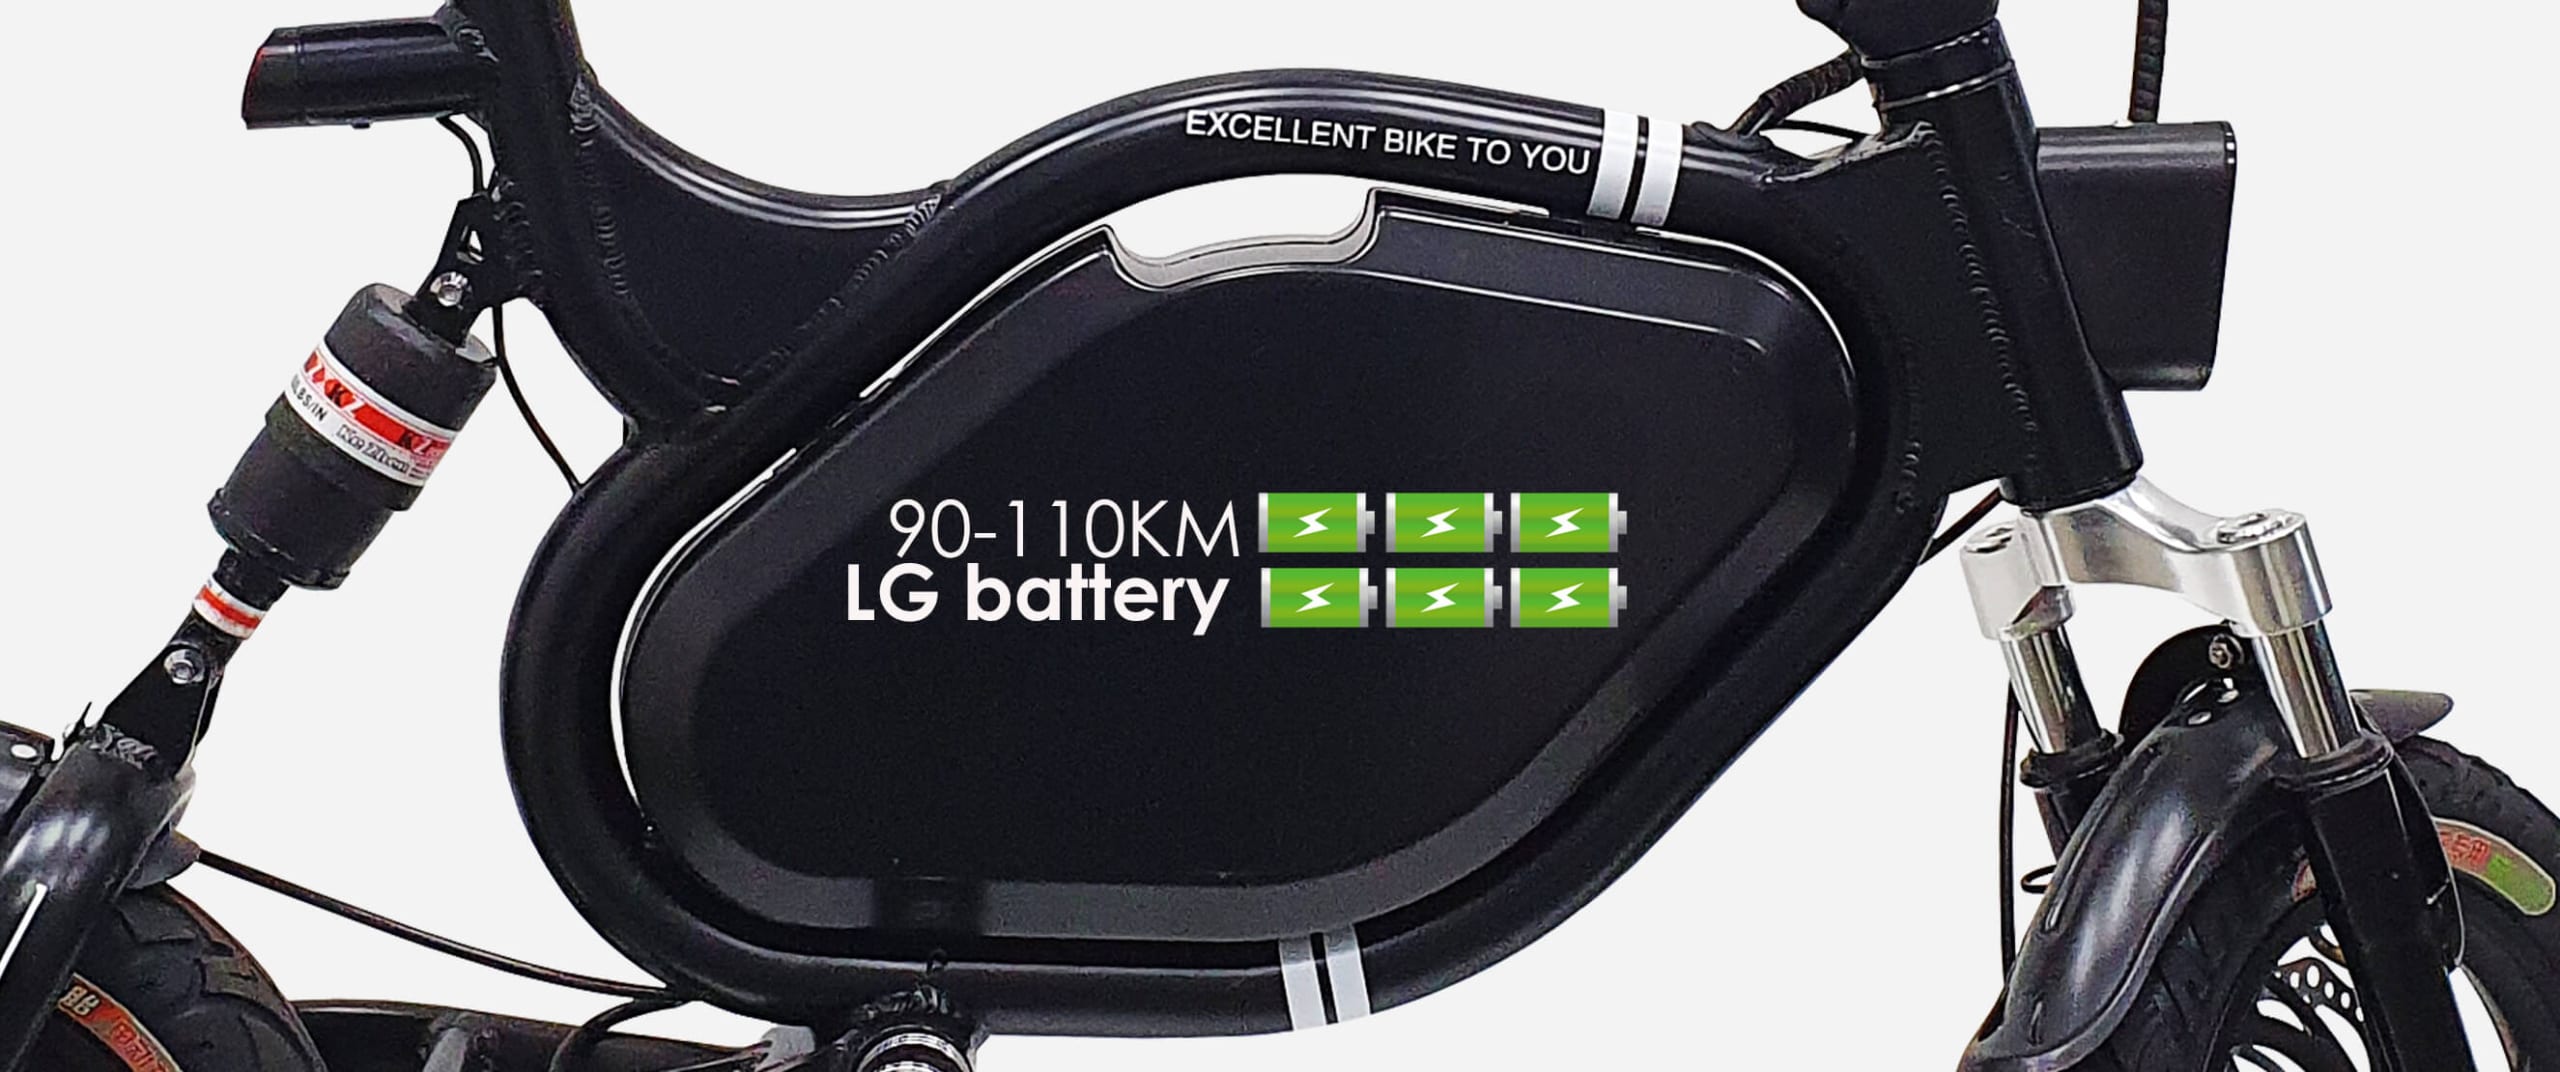 KNIGHT PRO 2 UL2272 certified e-scooter long distance battery